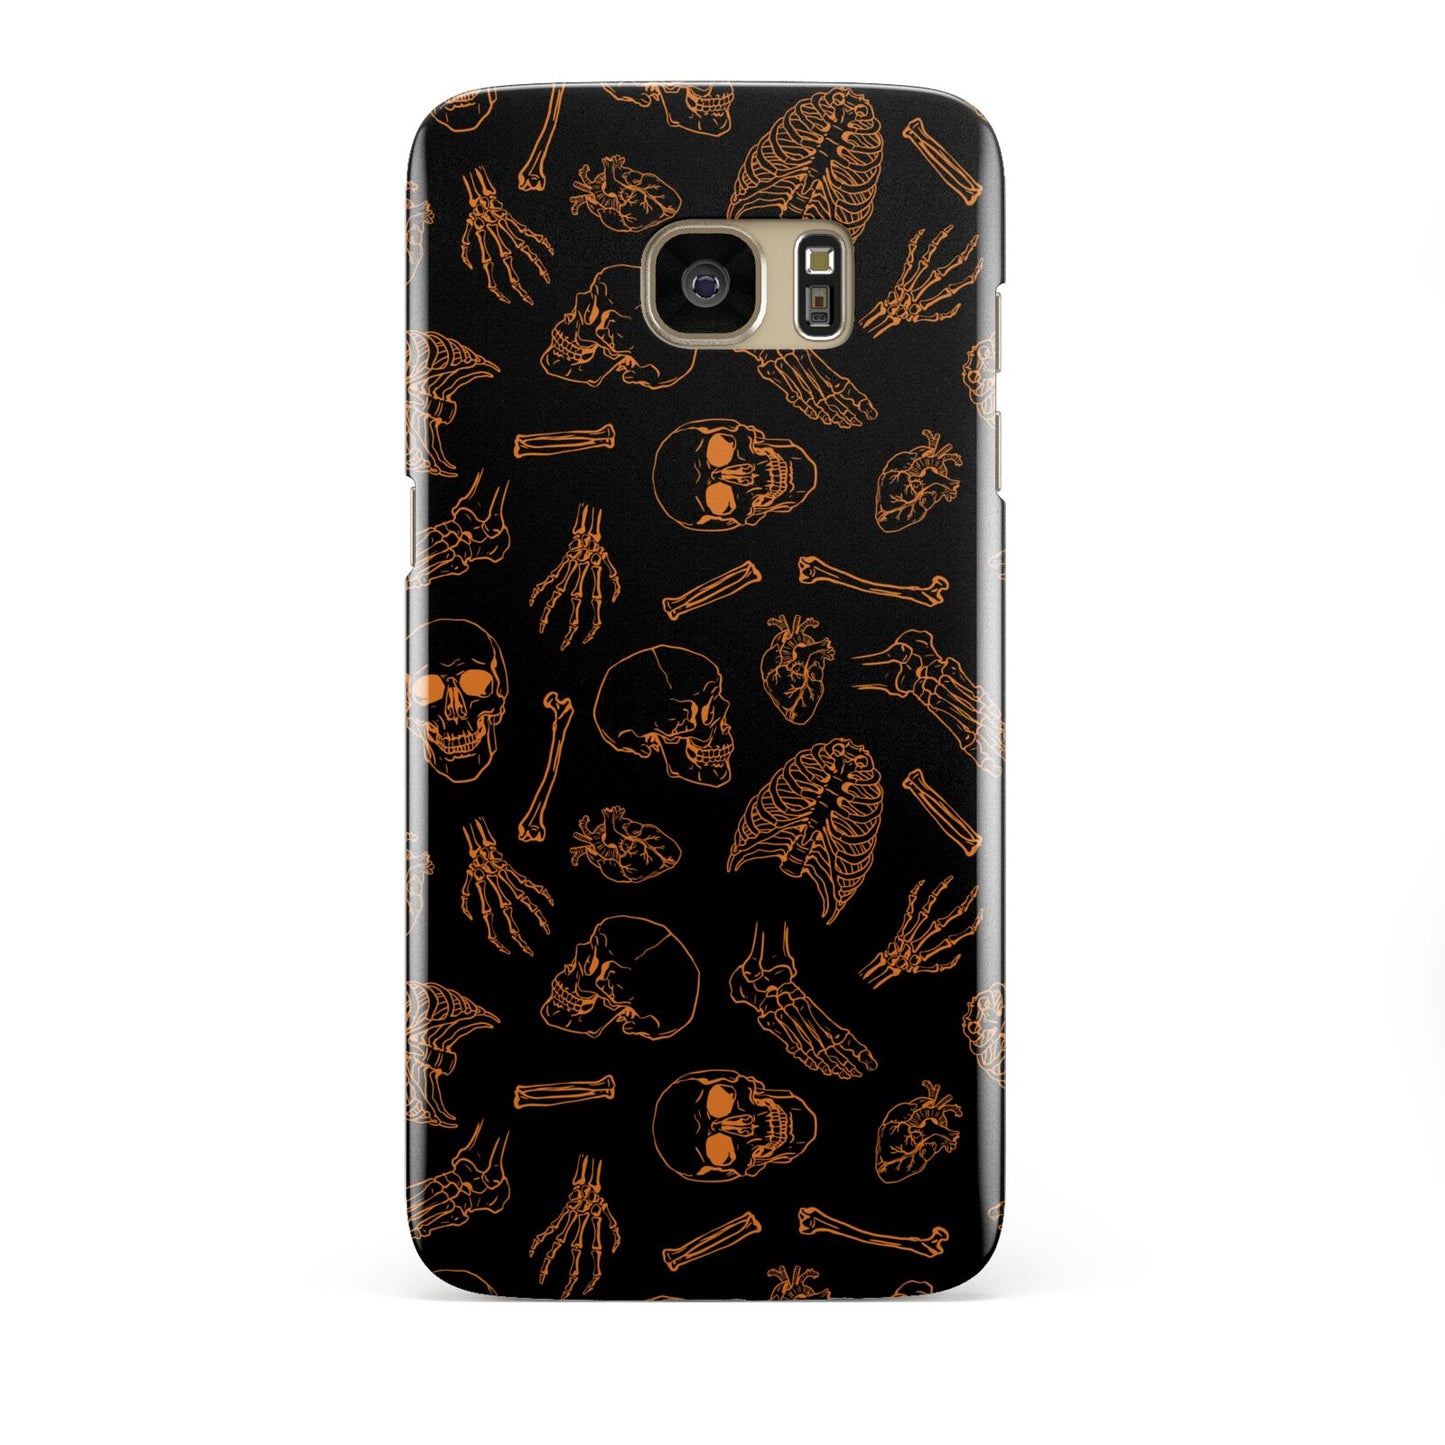 Orange Skeleton Illustrations Samsung Galaxy S7 Edge Case